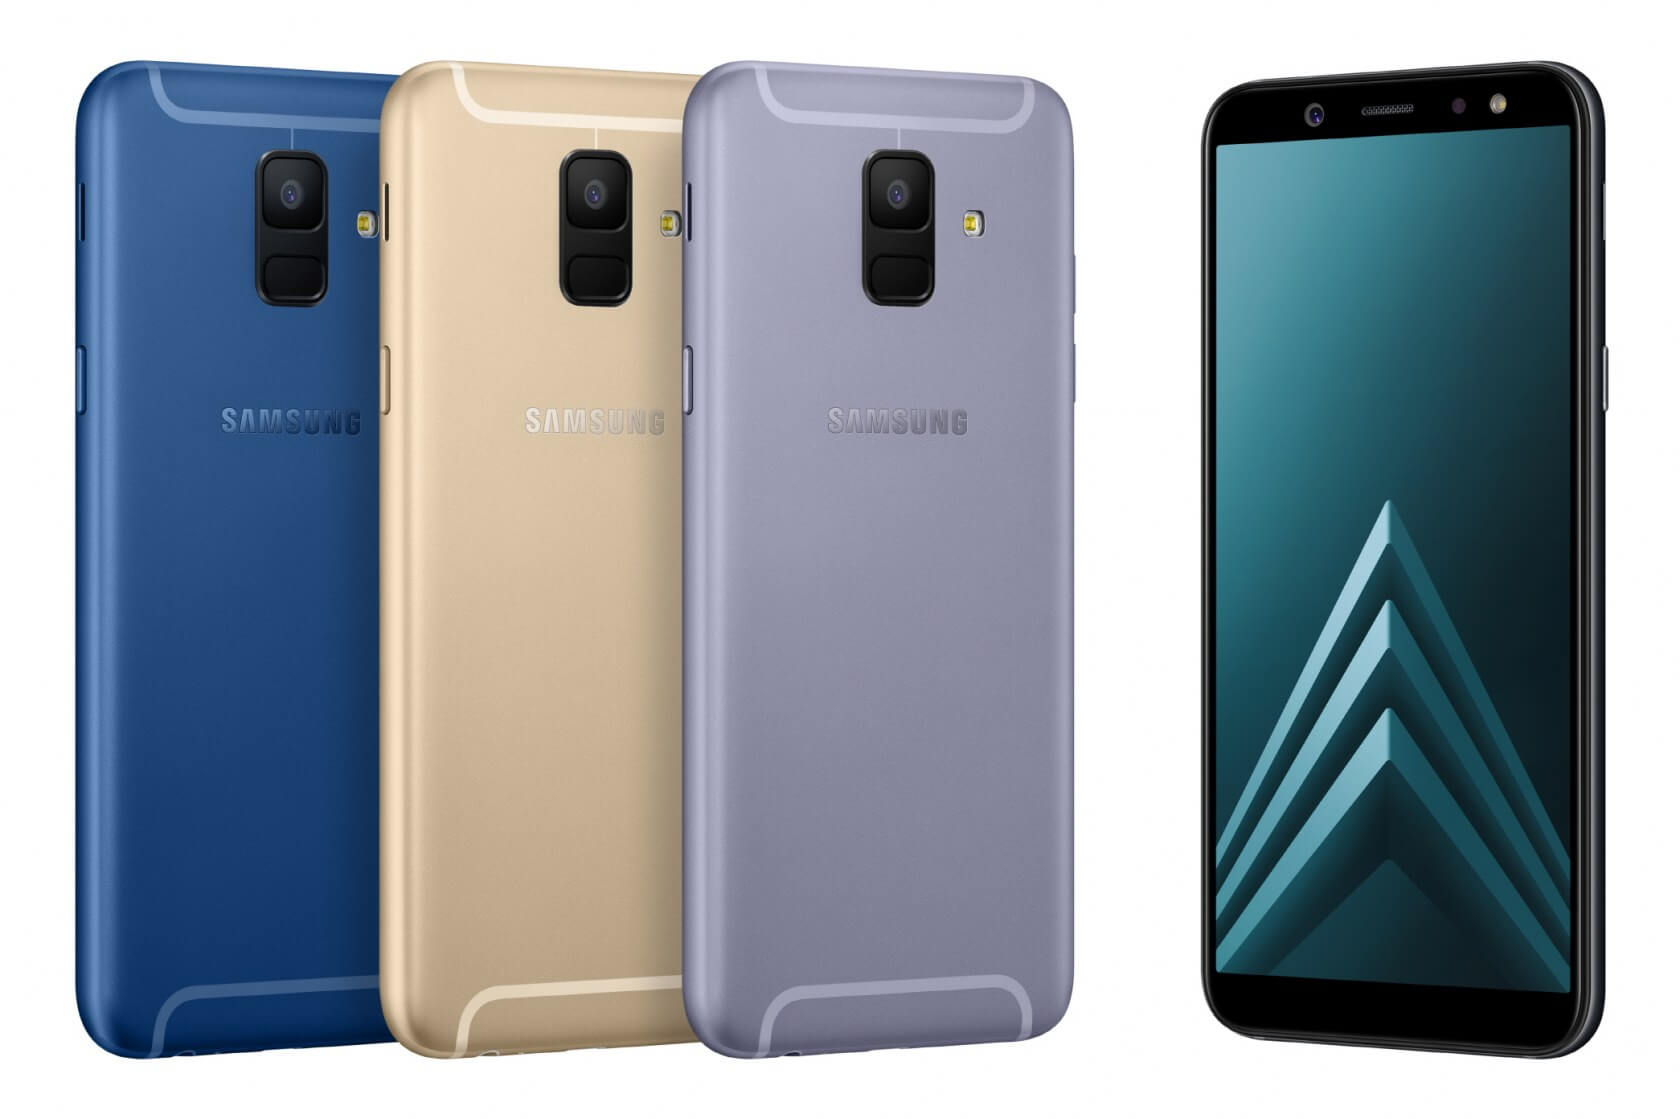 Samsung unveils the mid-range Galaxy A6/A6+